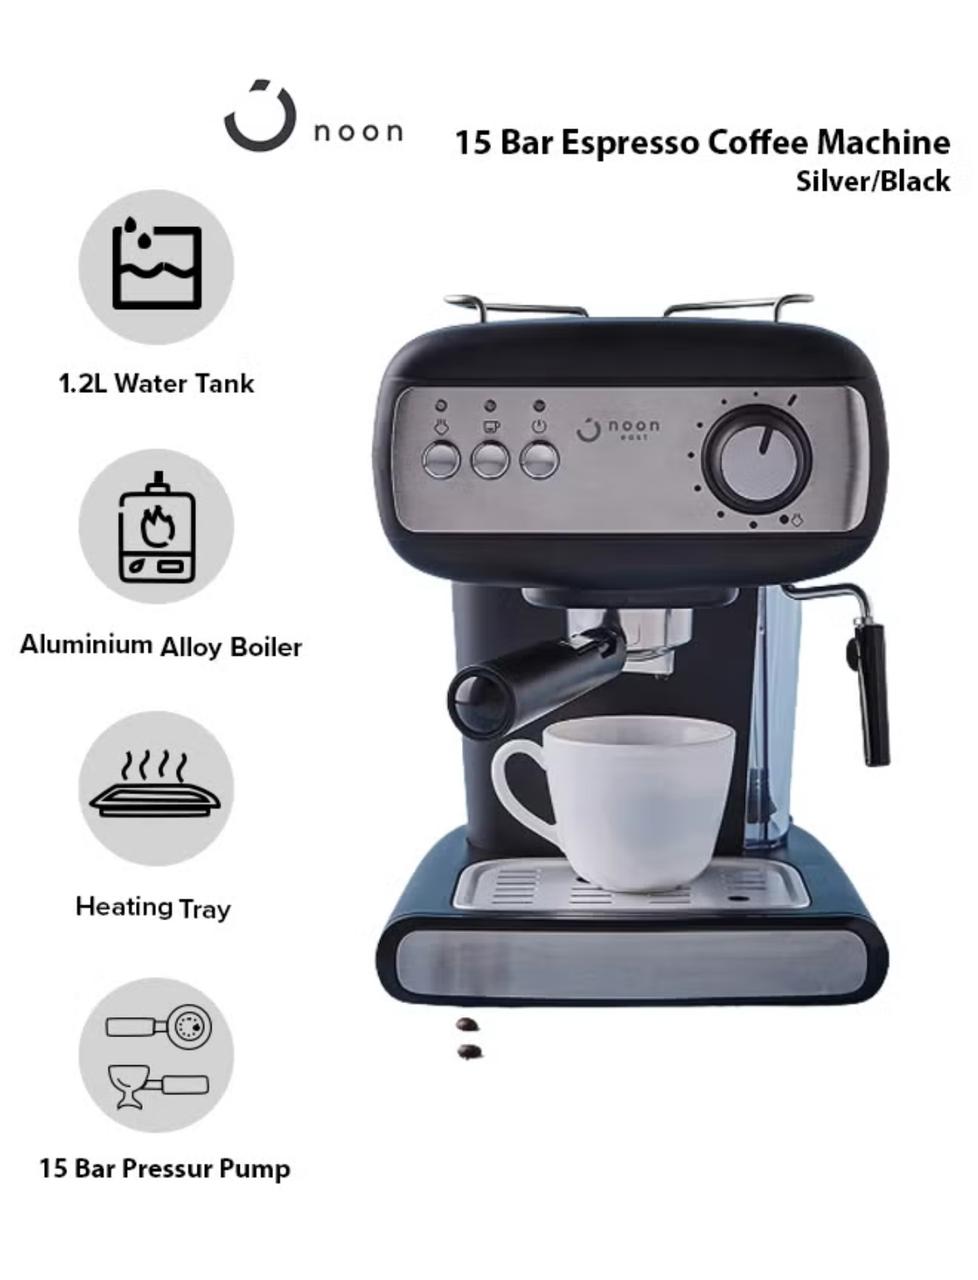 Noon Manual Espresso Coffee Machine - Black